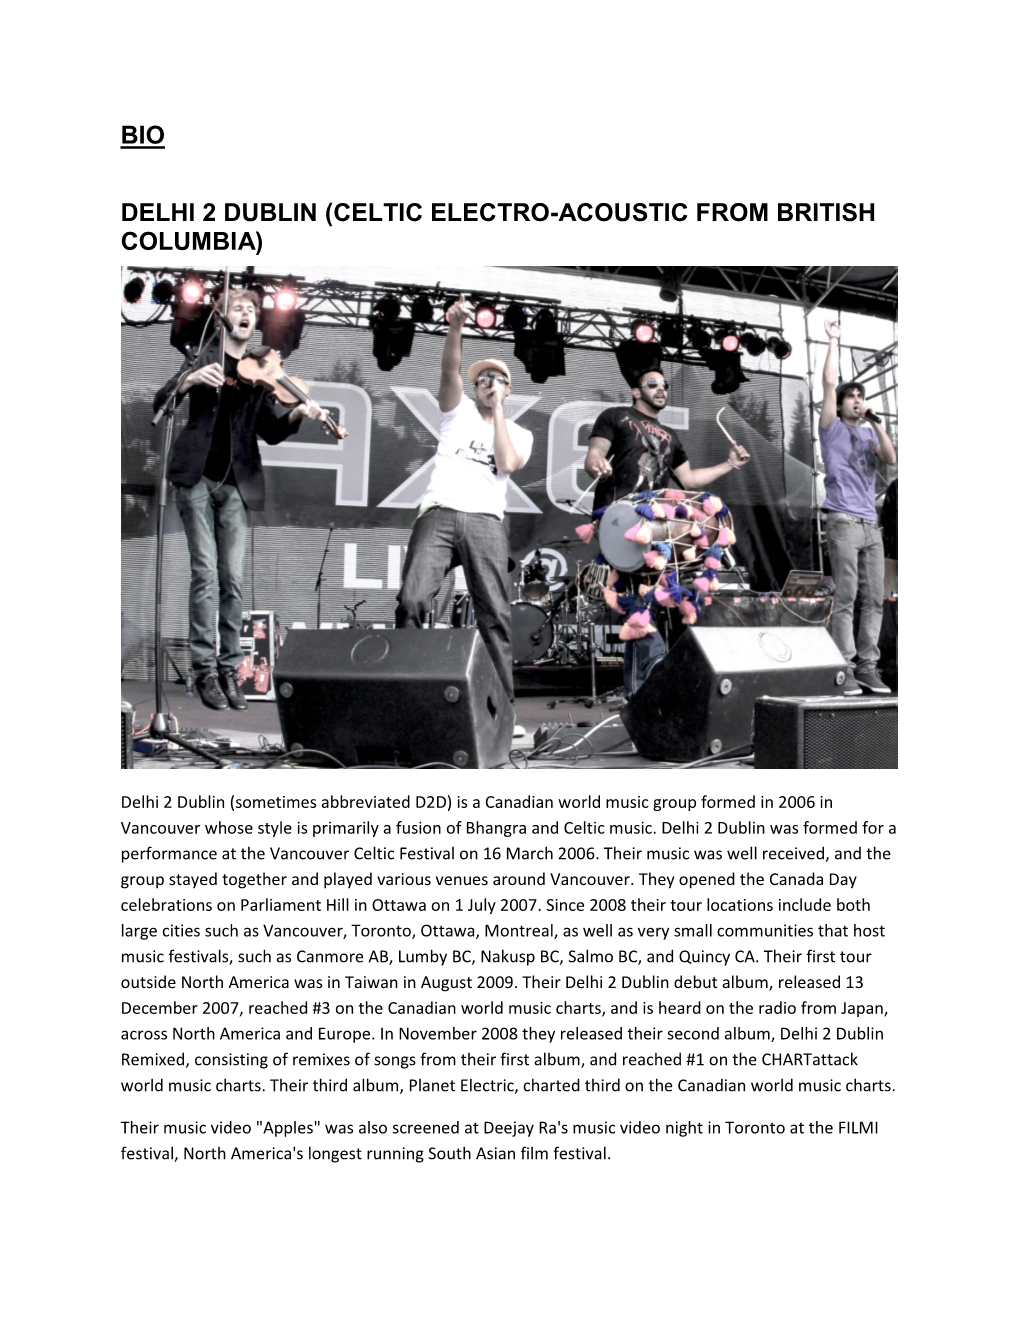 Bio Delhi 2 Dublin (Celtic Electro-Acoustic from British Columbia)